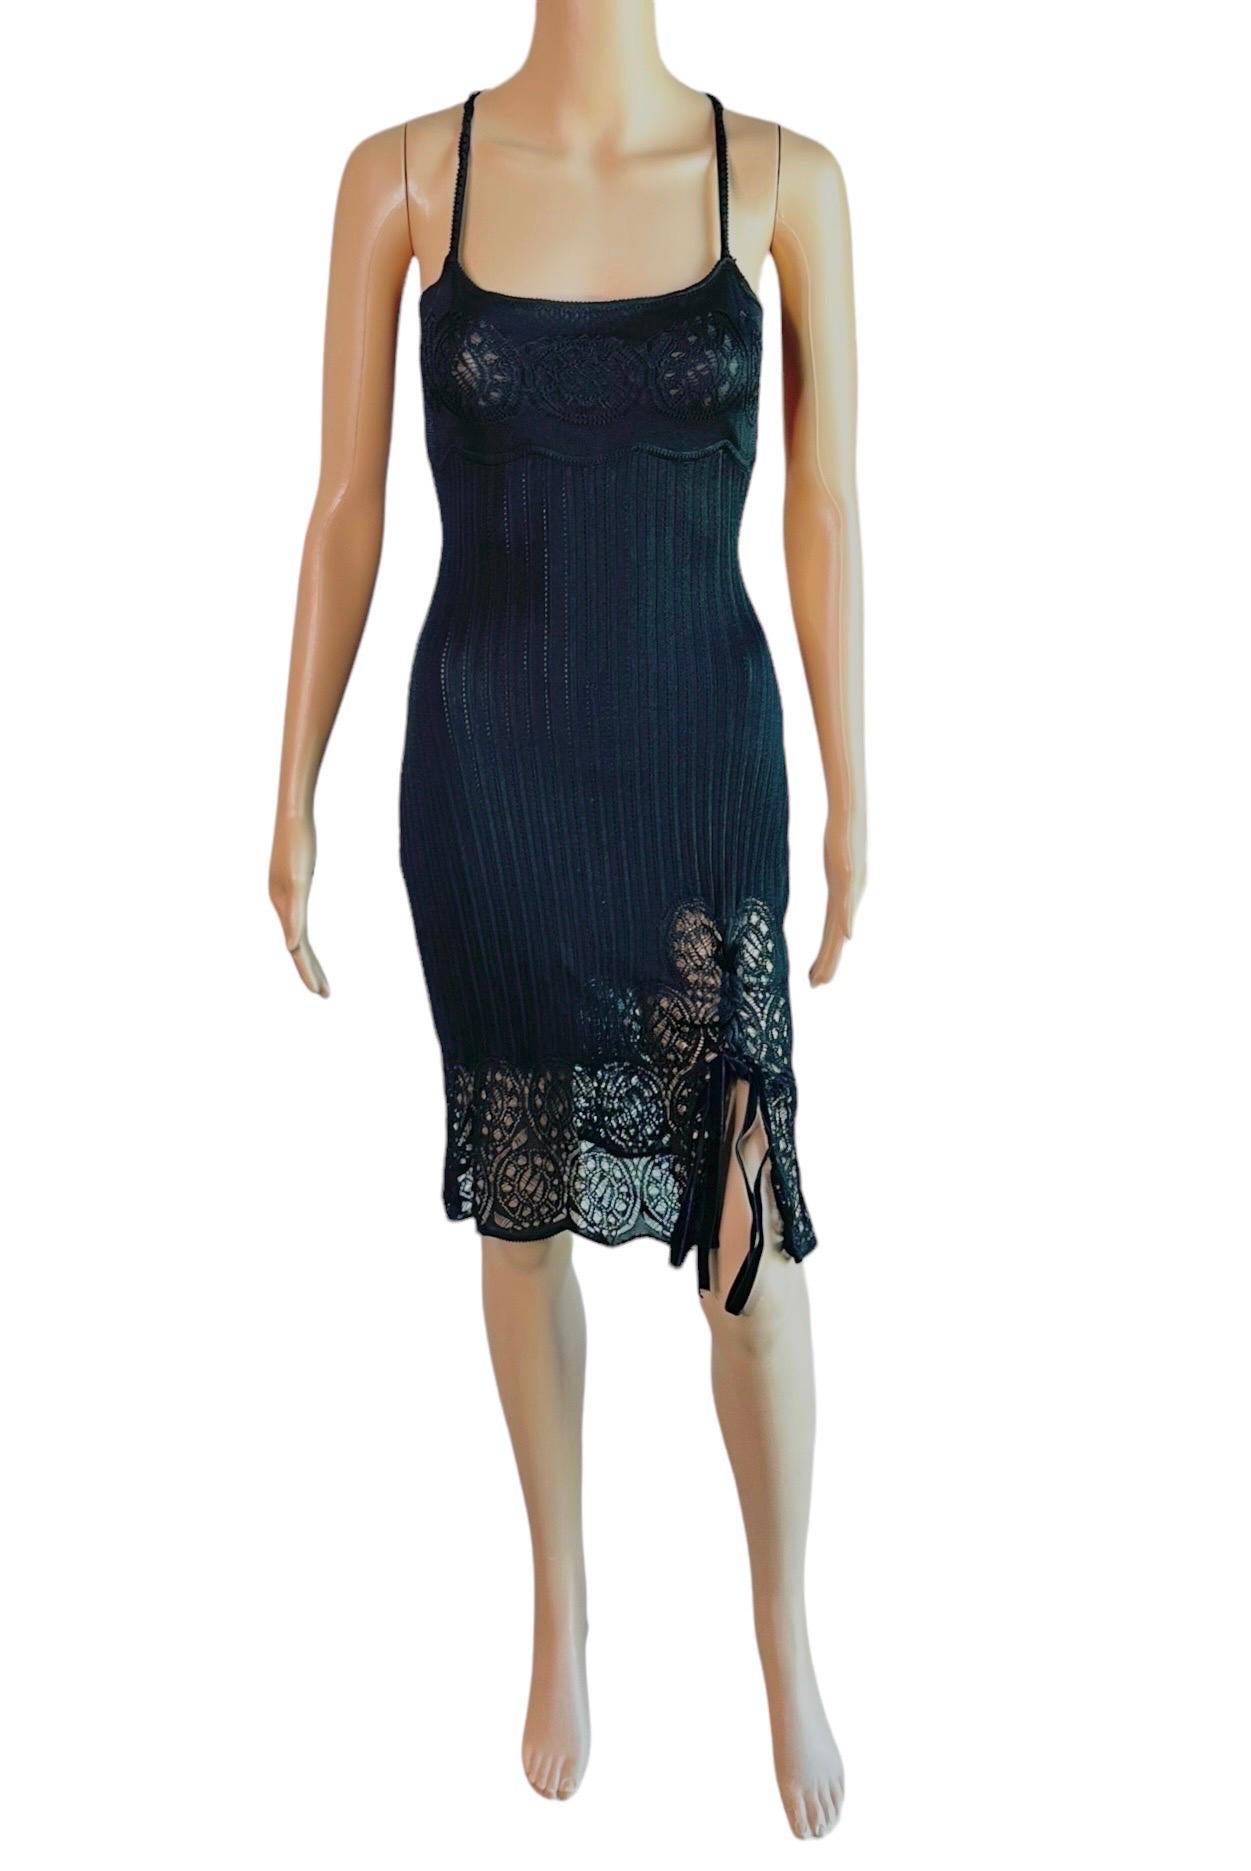 John Galliano S/S 1999 Sheer Lace Open Knit Black Mini Dress For Sale 2